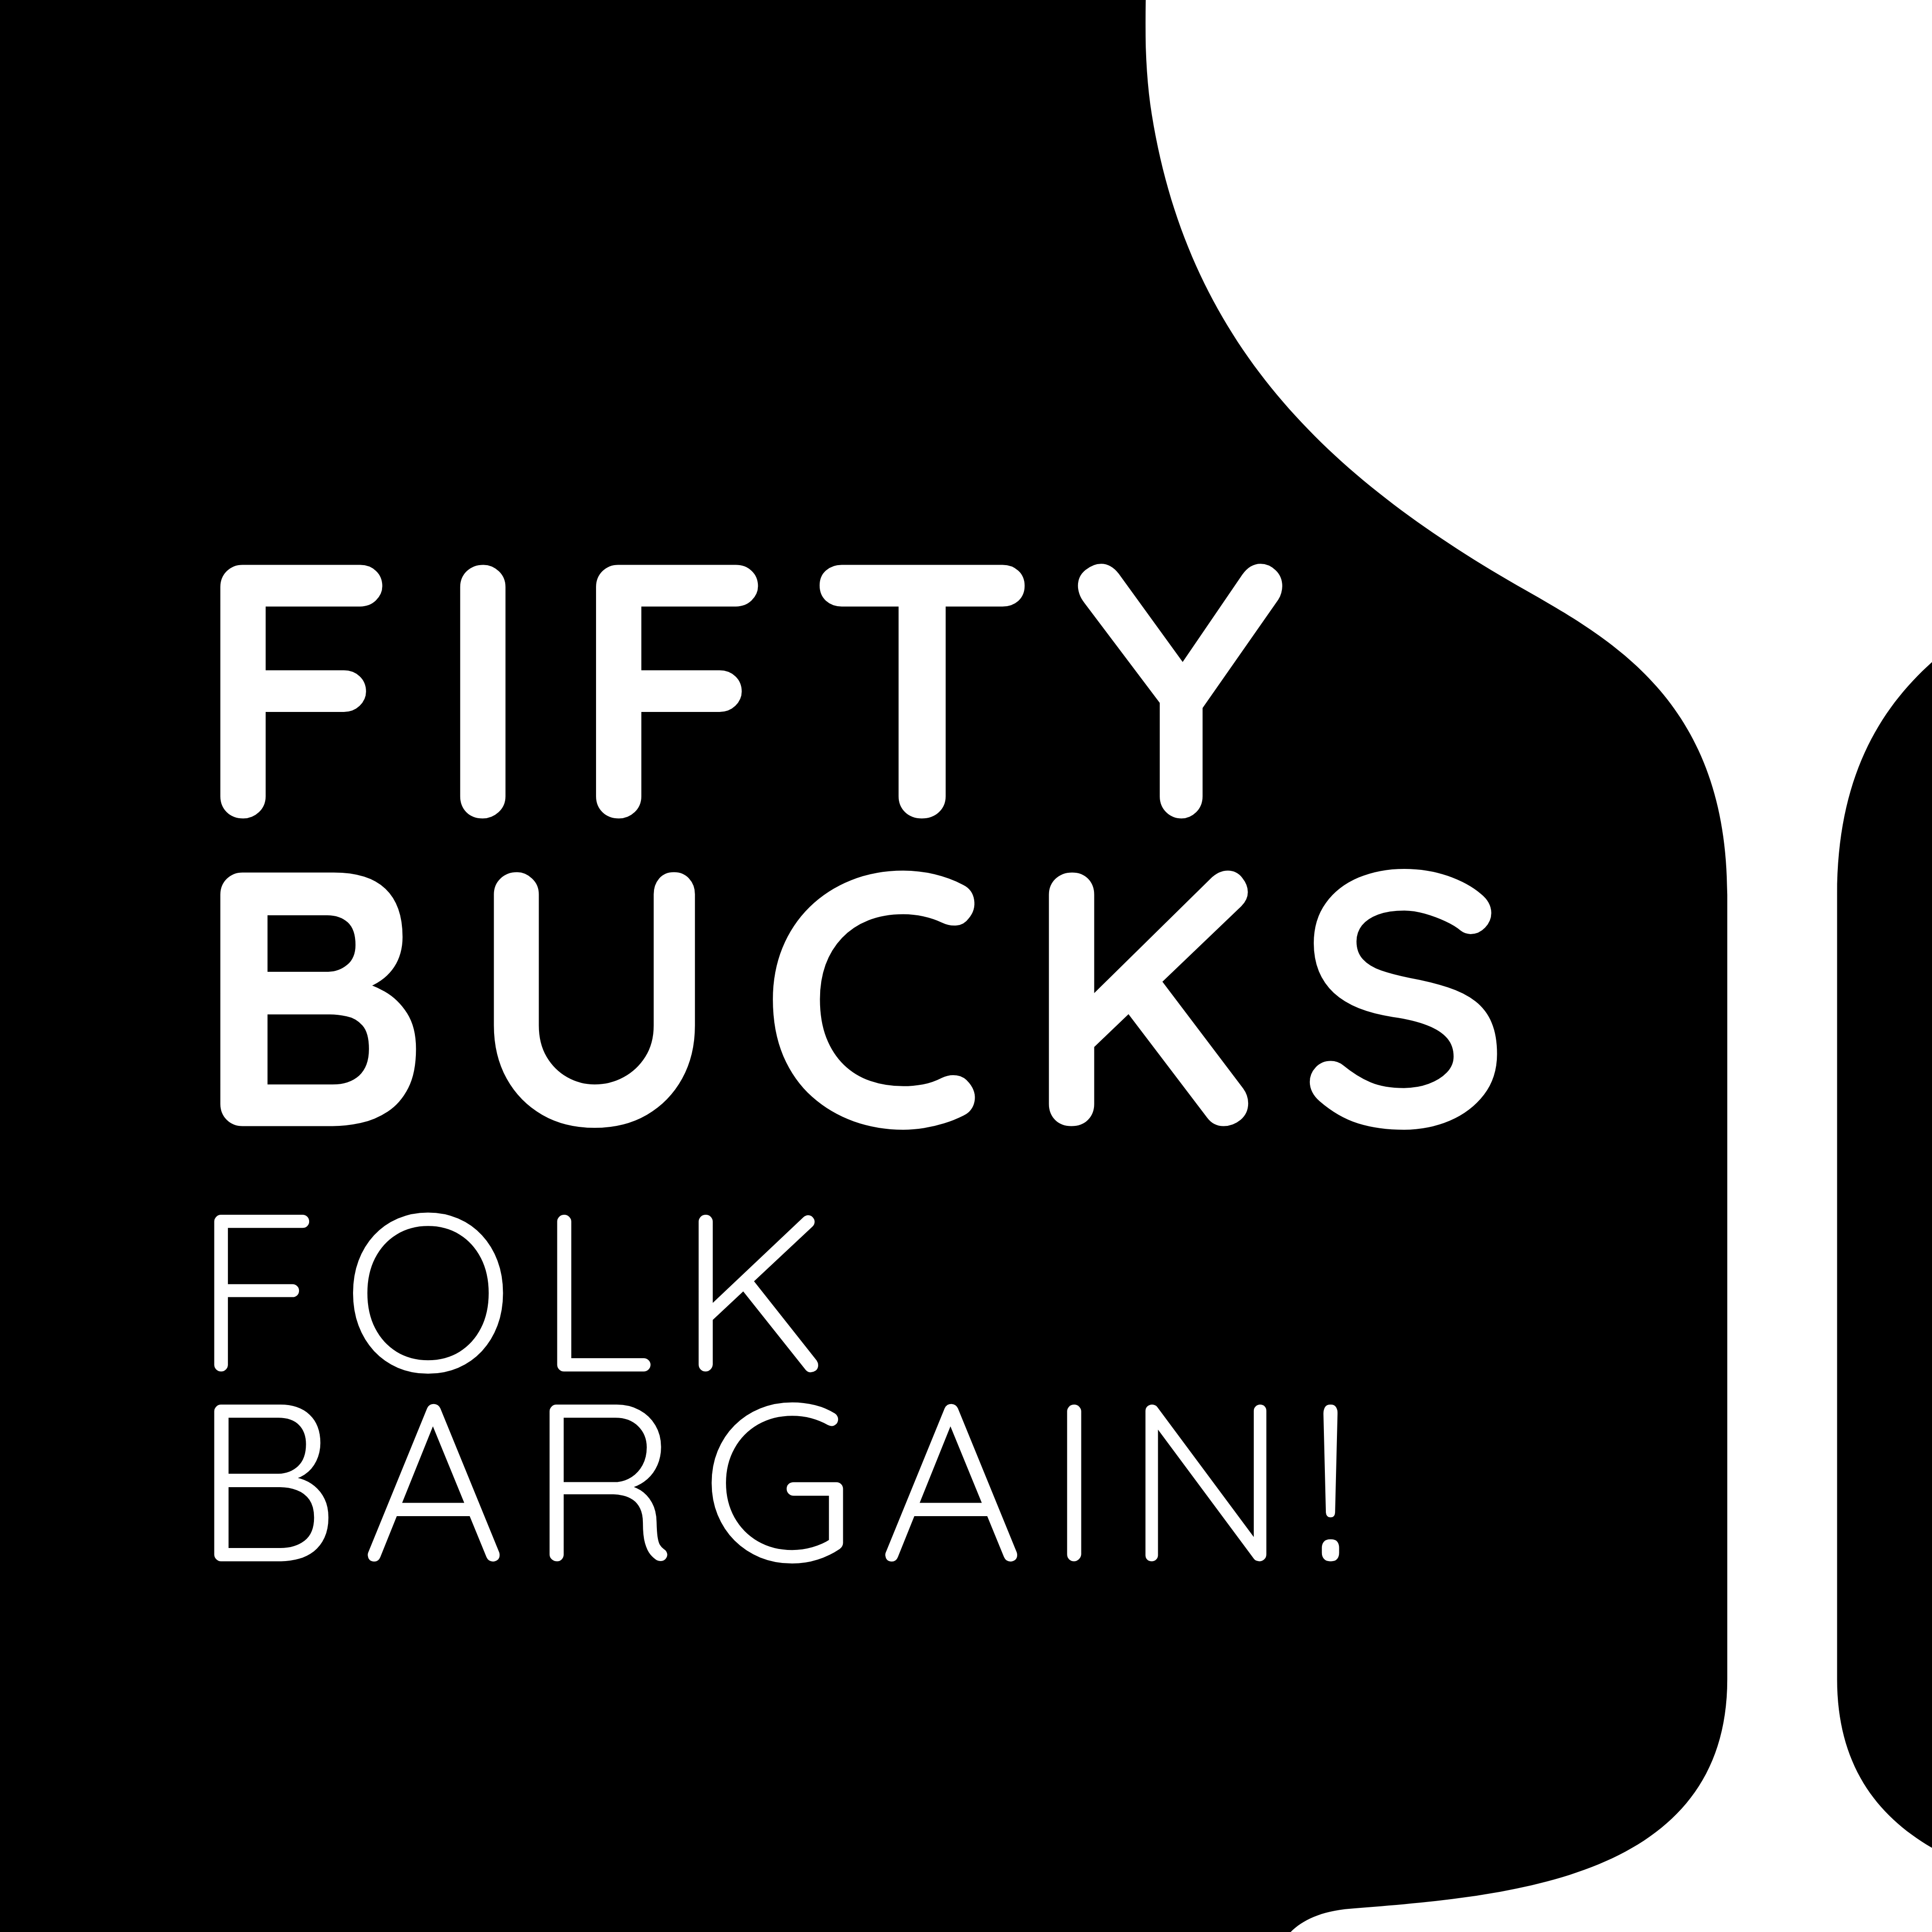 Fifty Bucks Folk Bargain square